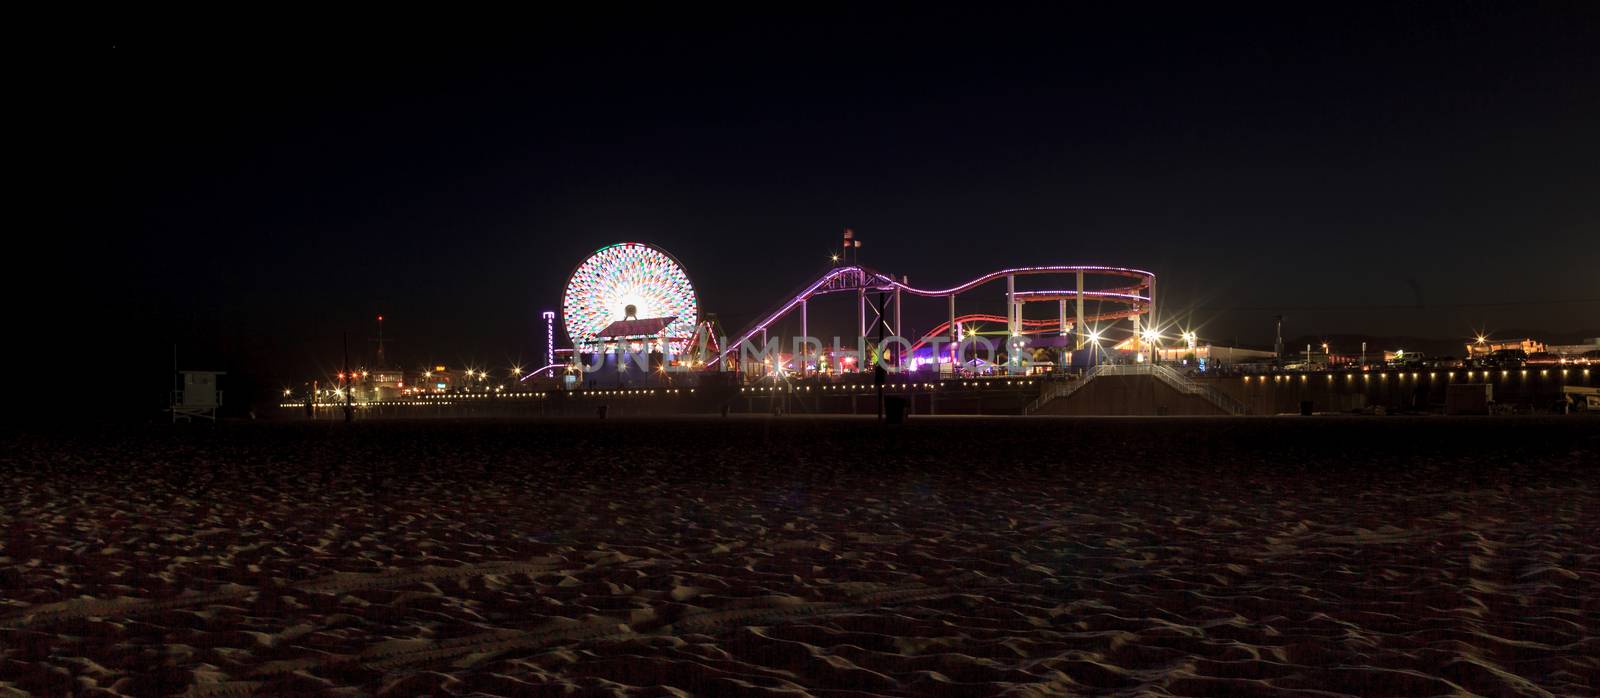 Santa Monica Pier boardwalk lit up at night by steffstarr